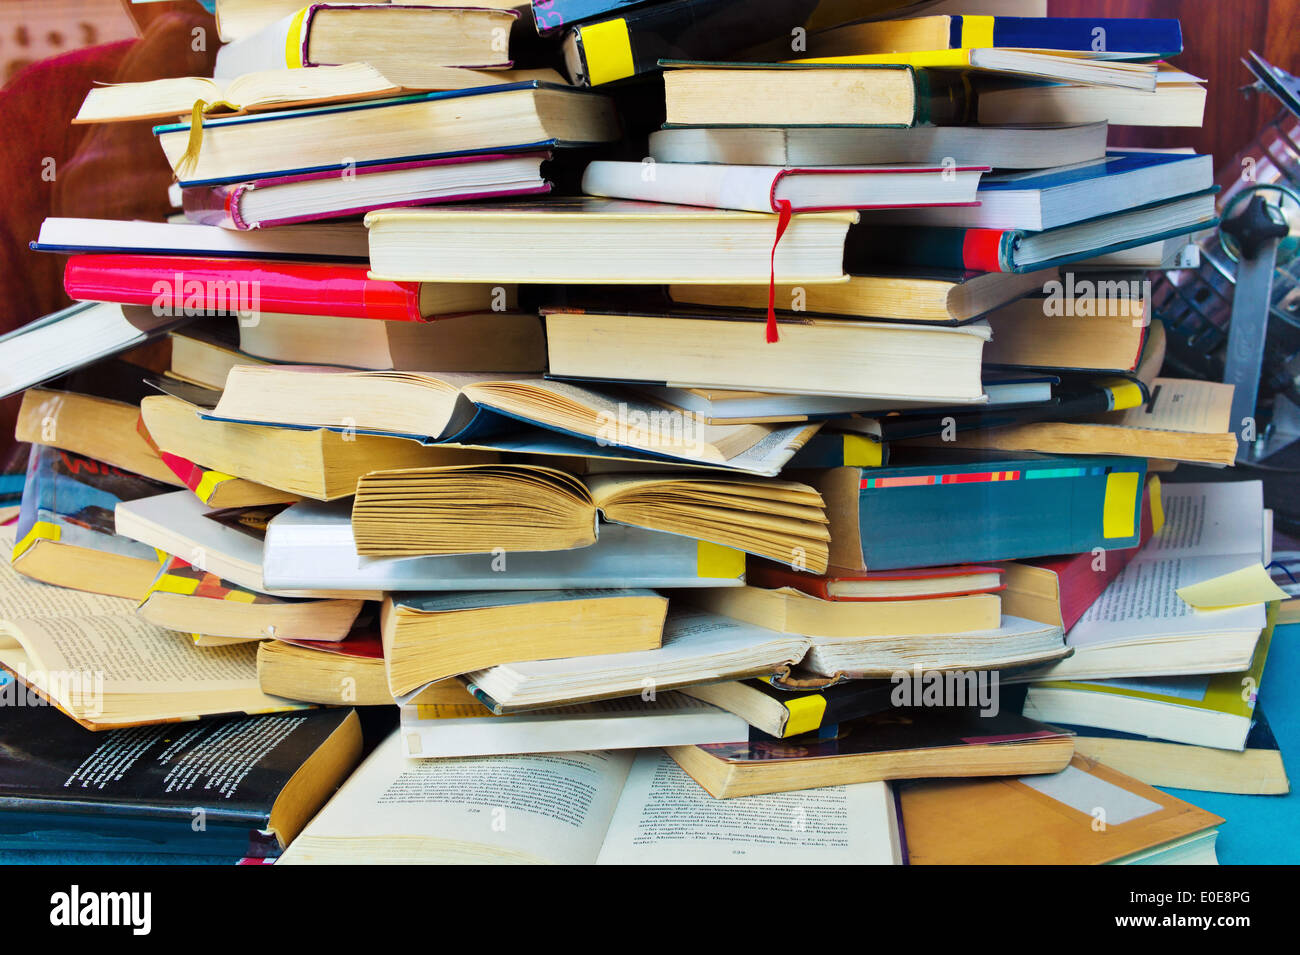 A pile completely whipped and closed books, Ein Stapel voll aufgeschlagen und geschlossener Buecher Stock Photo